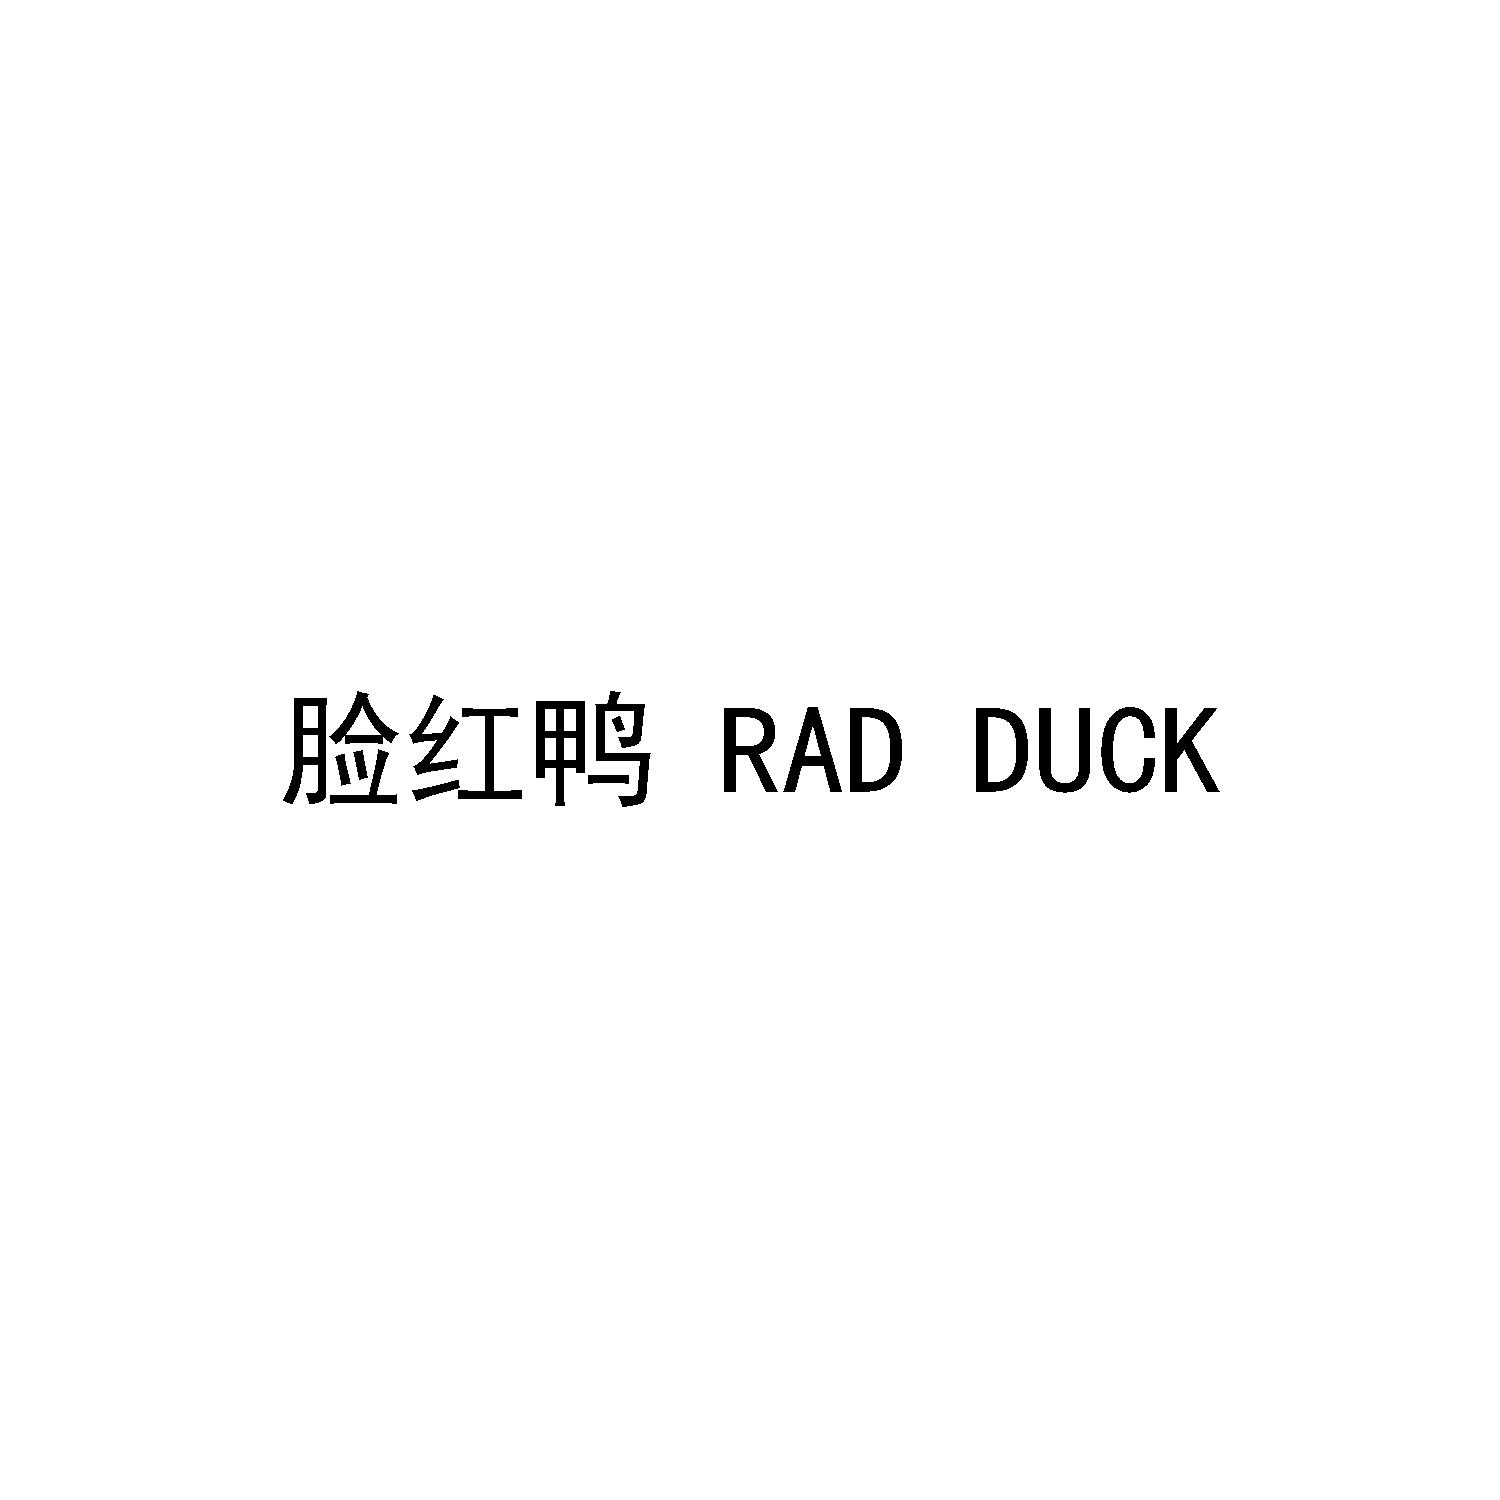 脸红鸭Red Duck